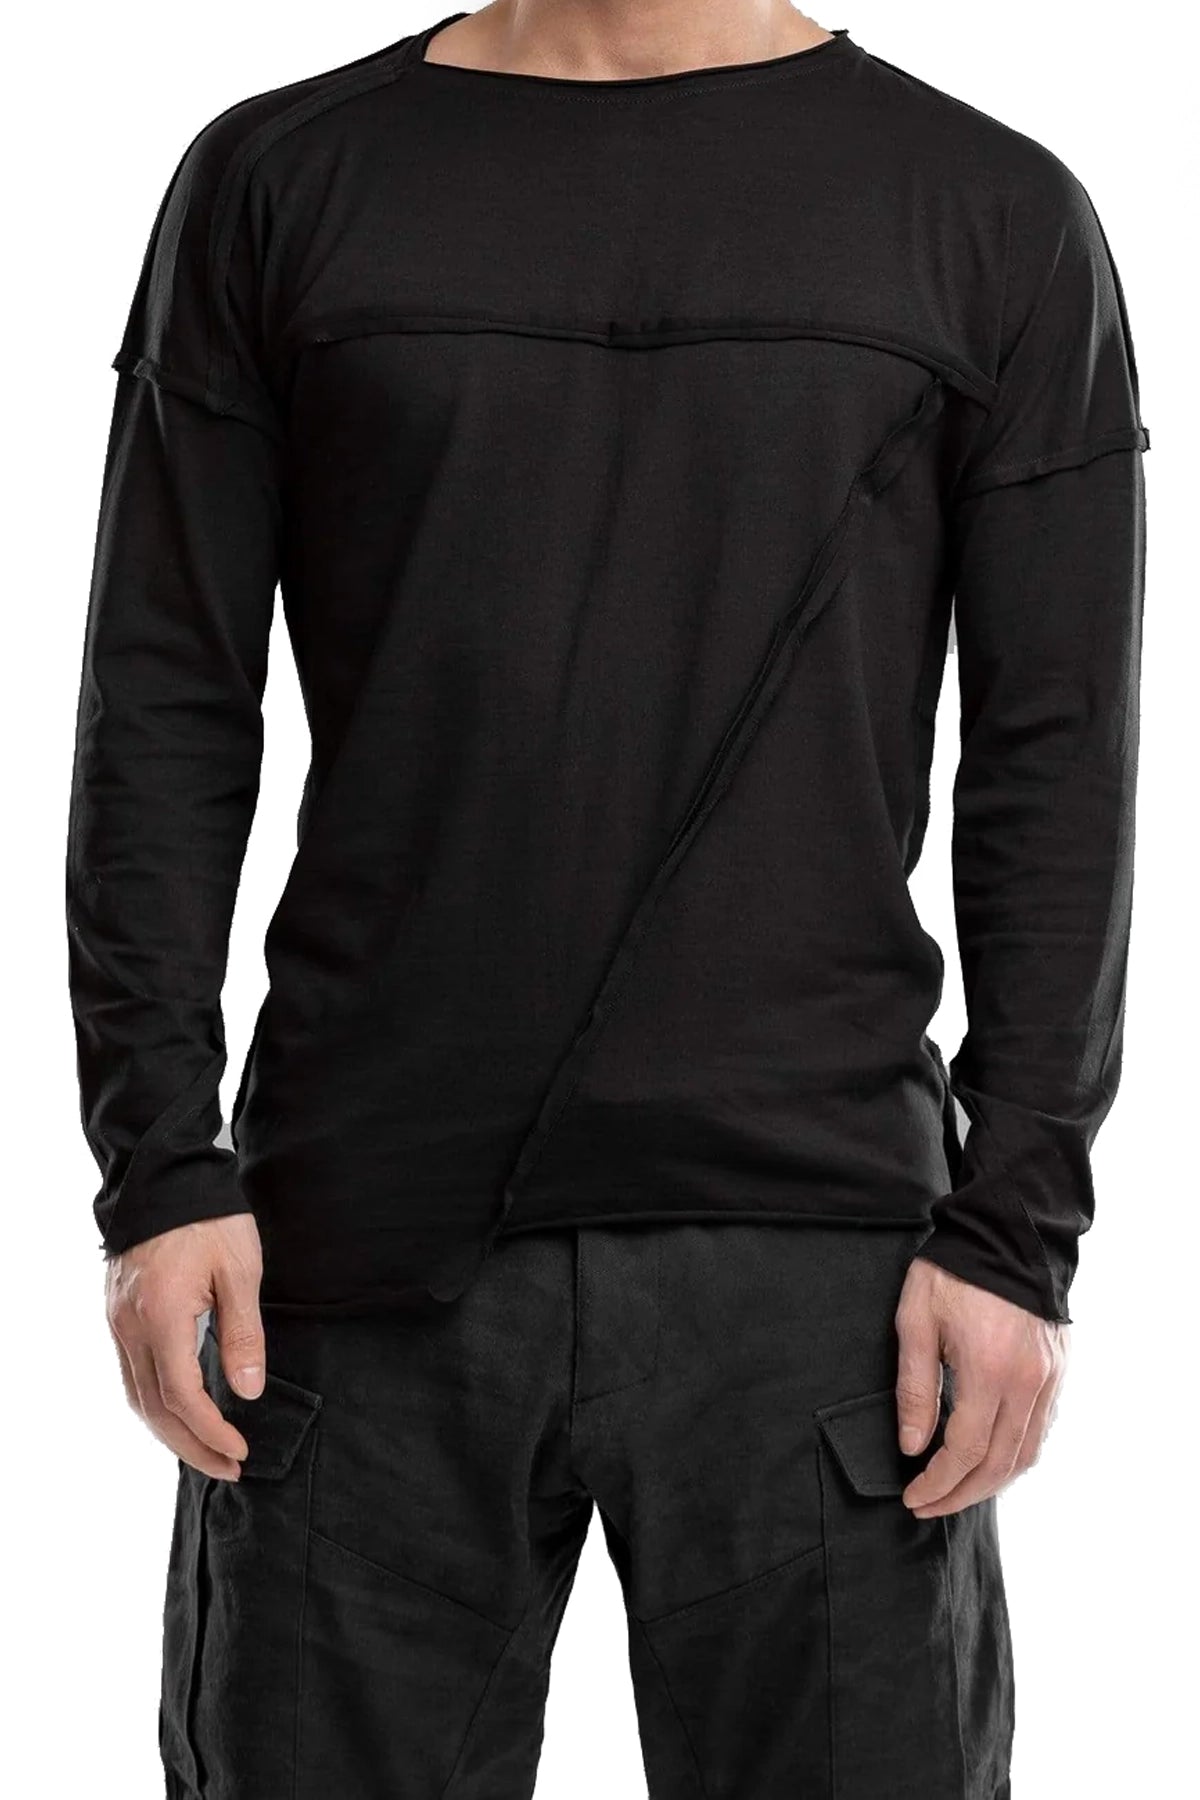 Bundle: 3x Black Long Sleeve T-shirt